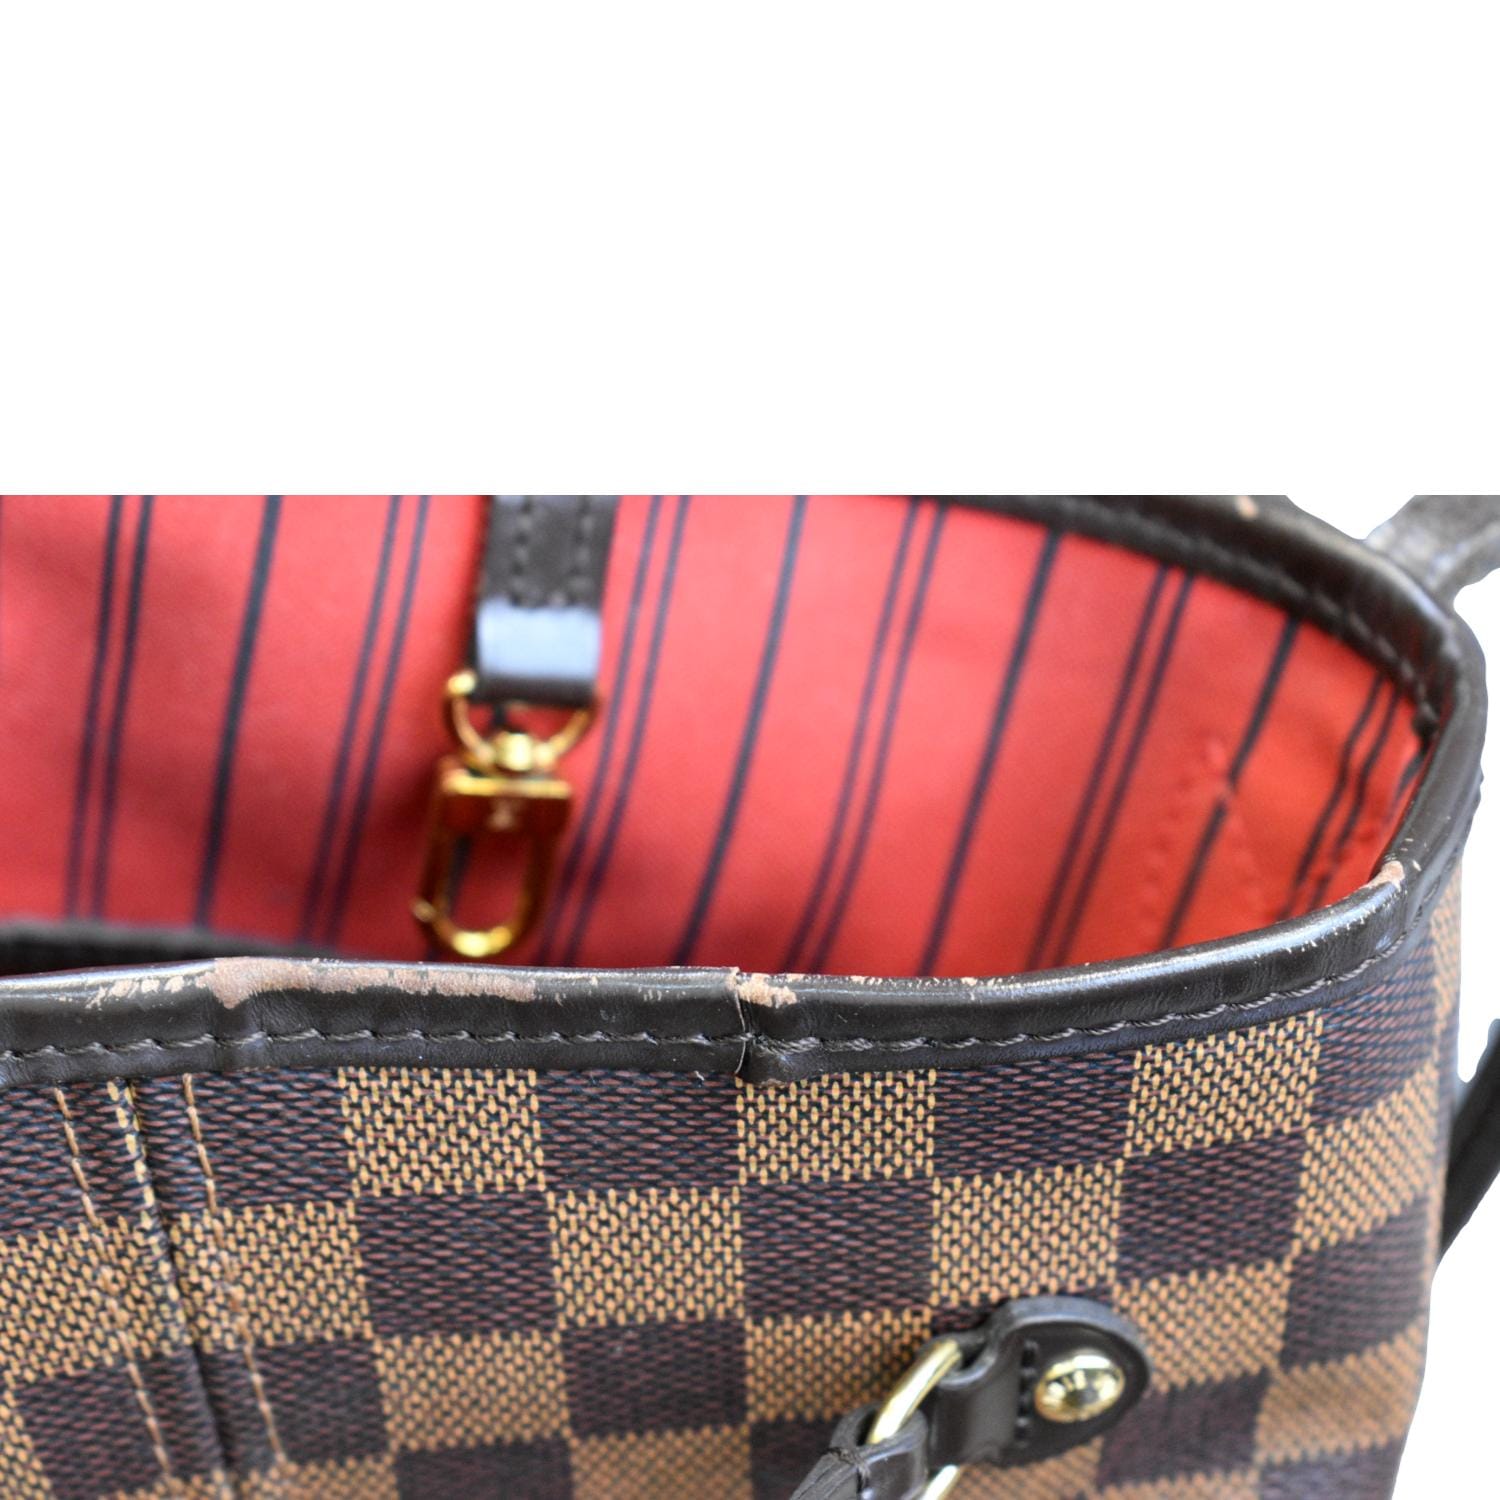 Louis Vuitton, Bags, Louis Vuitton Neverfull Nm Tote Damien Mm Purse Bag  Brand New Brown Checker Red